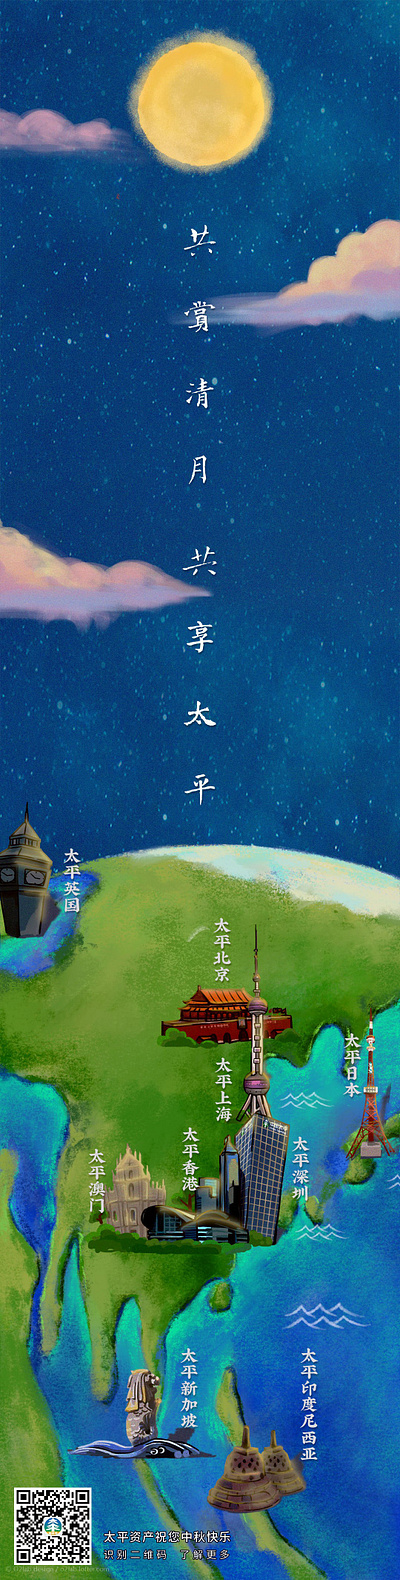 WeChat Official Account Poster Design branding illustration illustrator typography